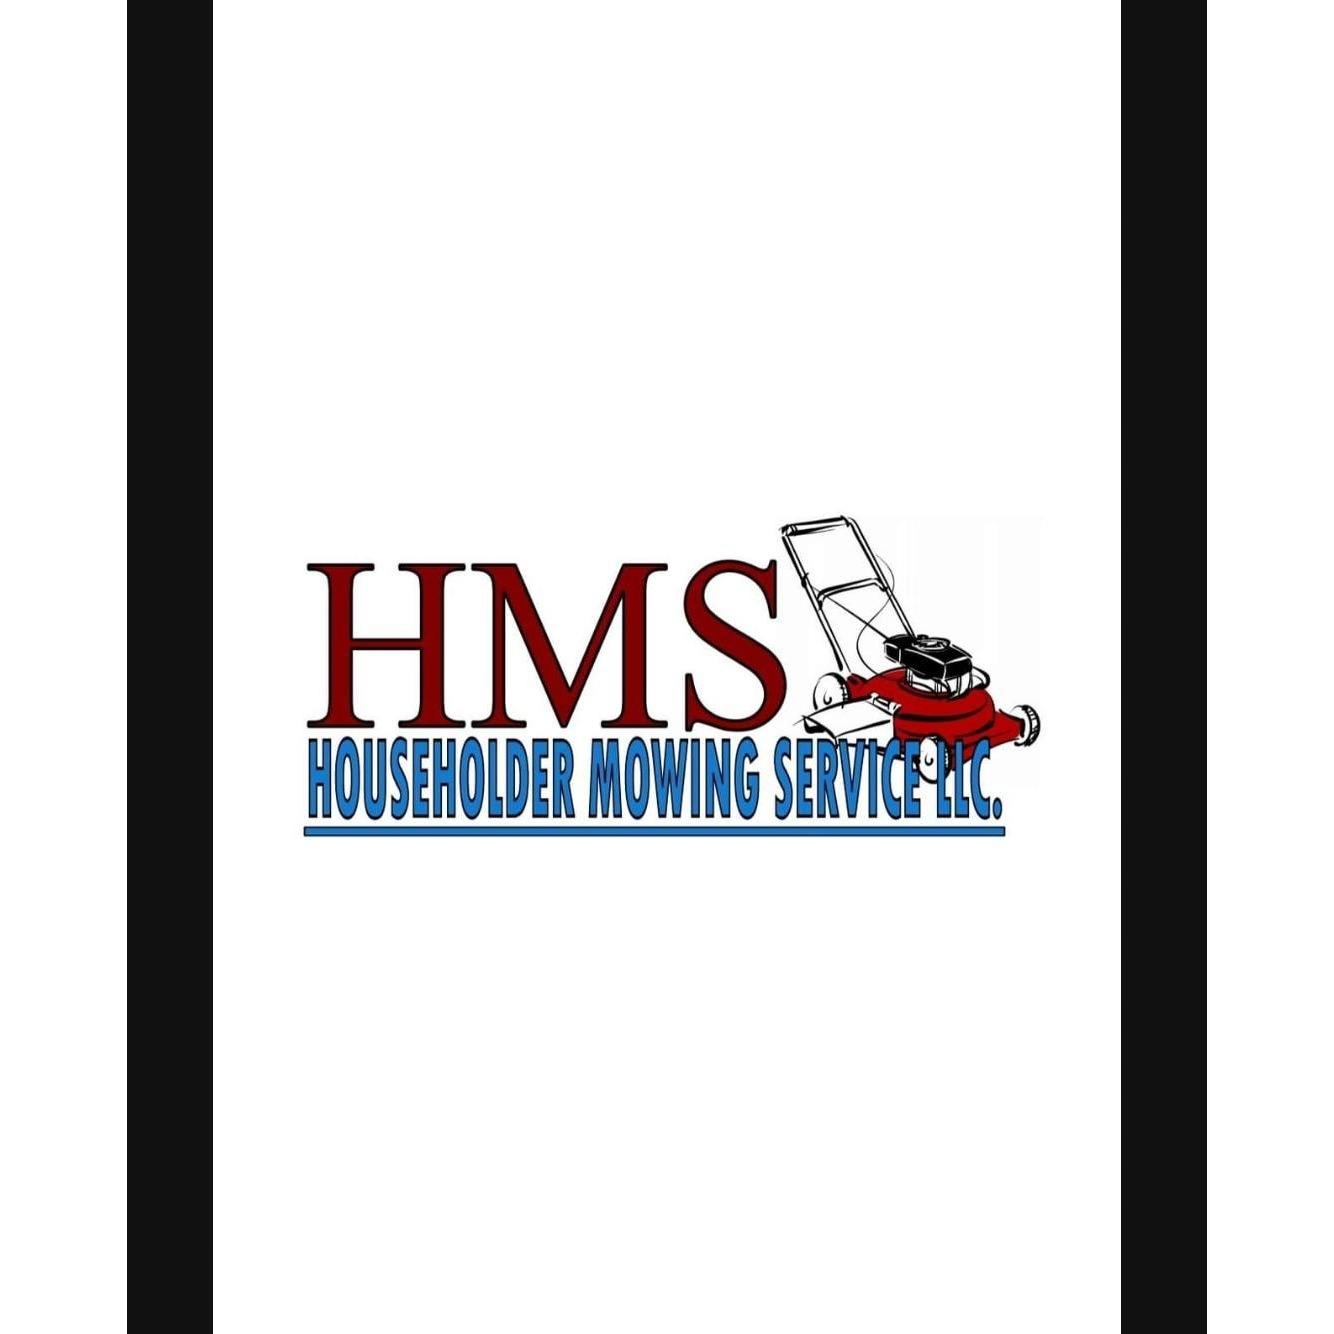 Householder Mowing Service, LLC Portland (971)331-8660